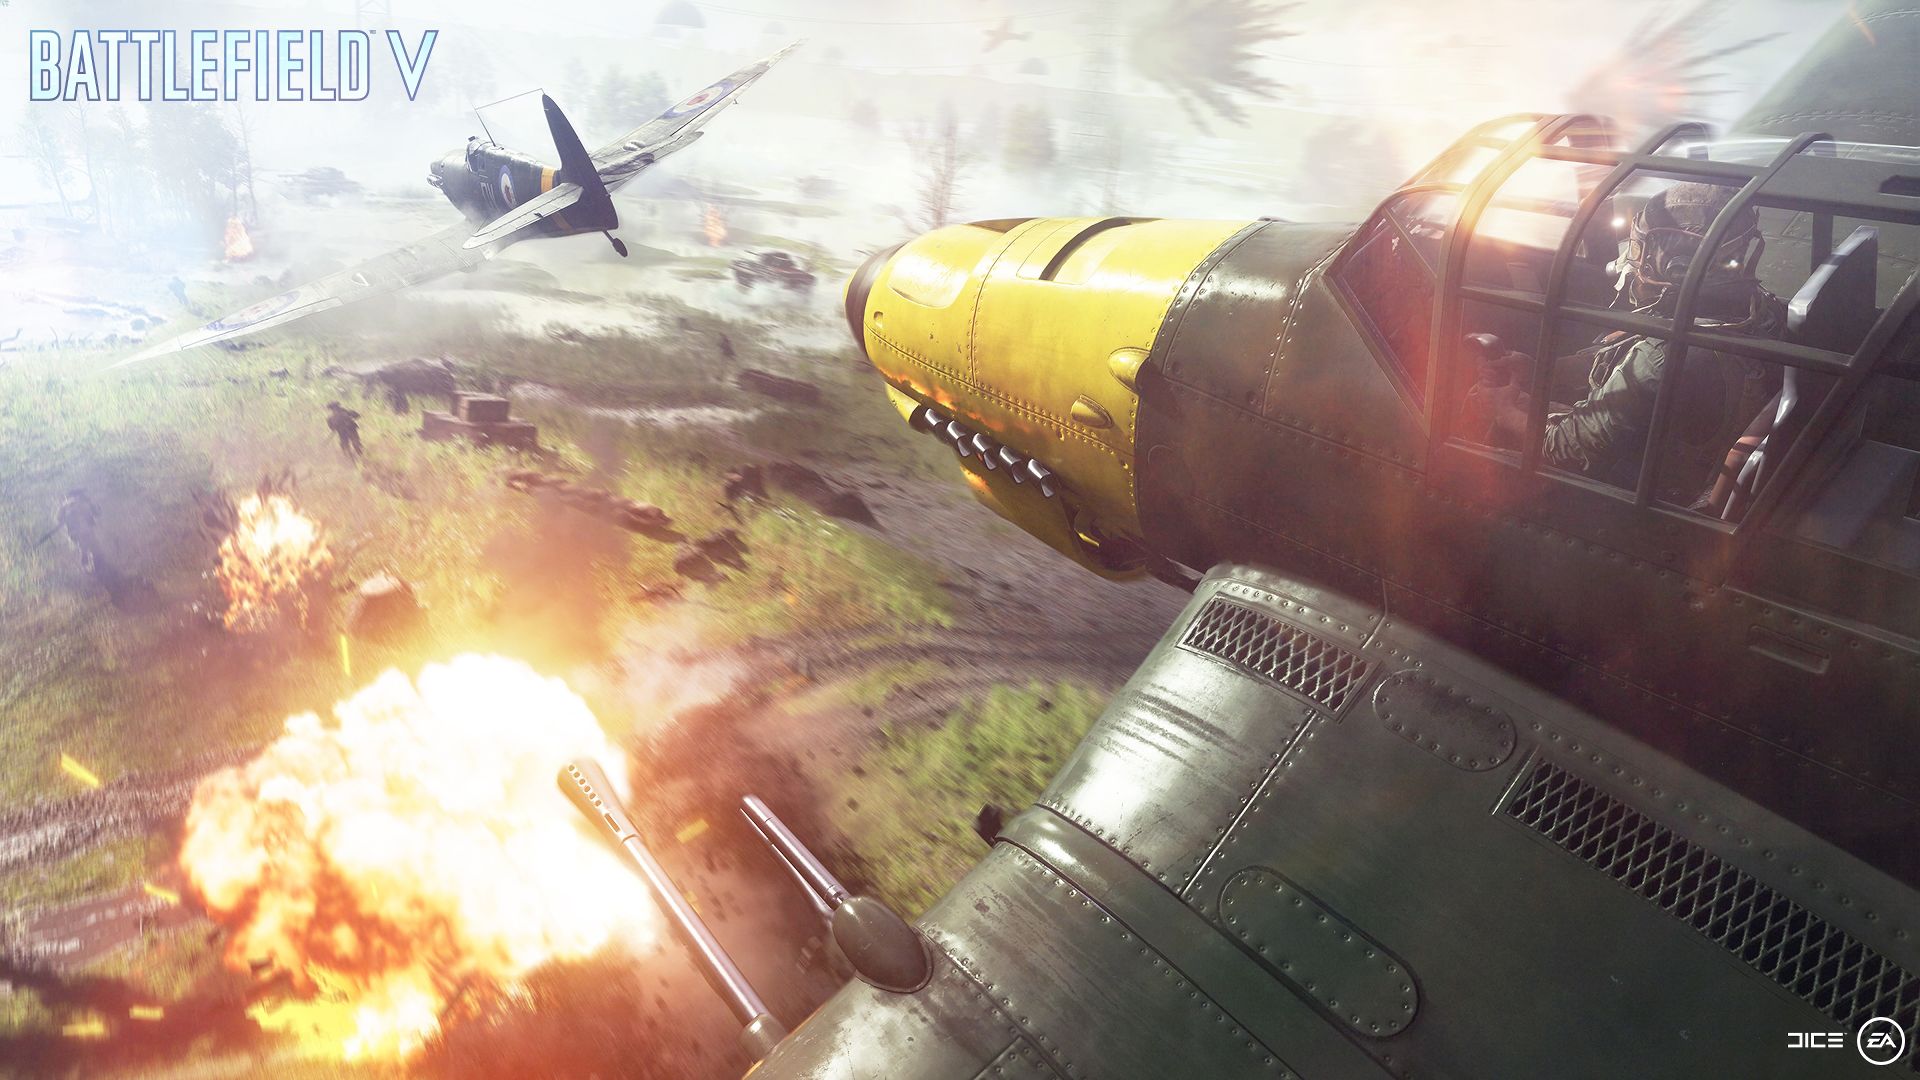 Батлфилд 5, скриншот, Battlefield 5, E3 2018, screenshot, 4K (horizontal)